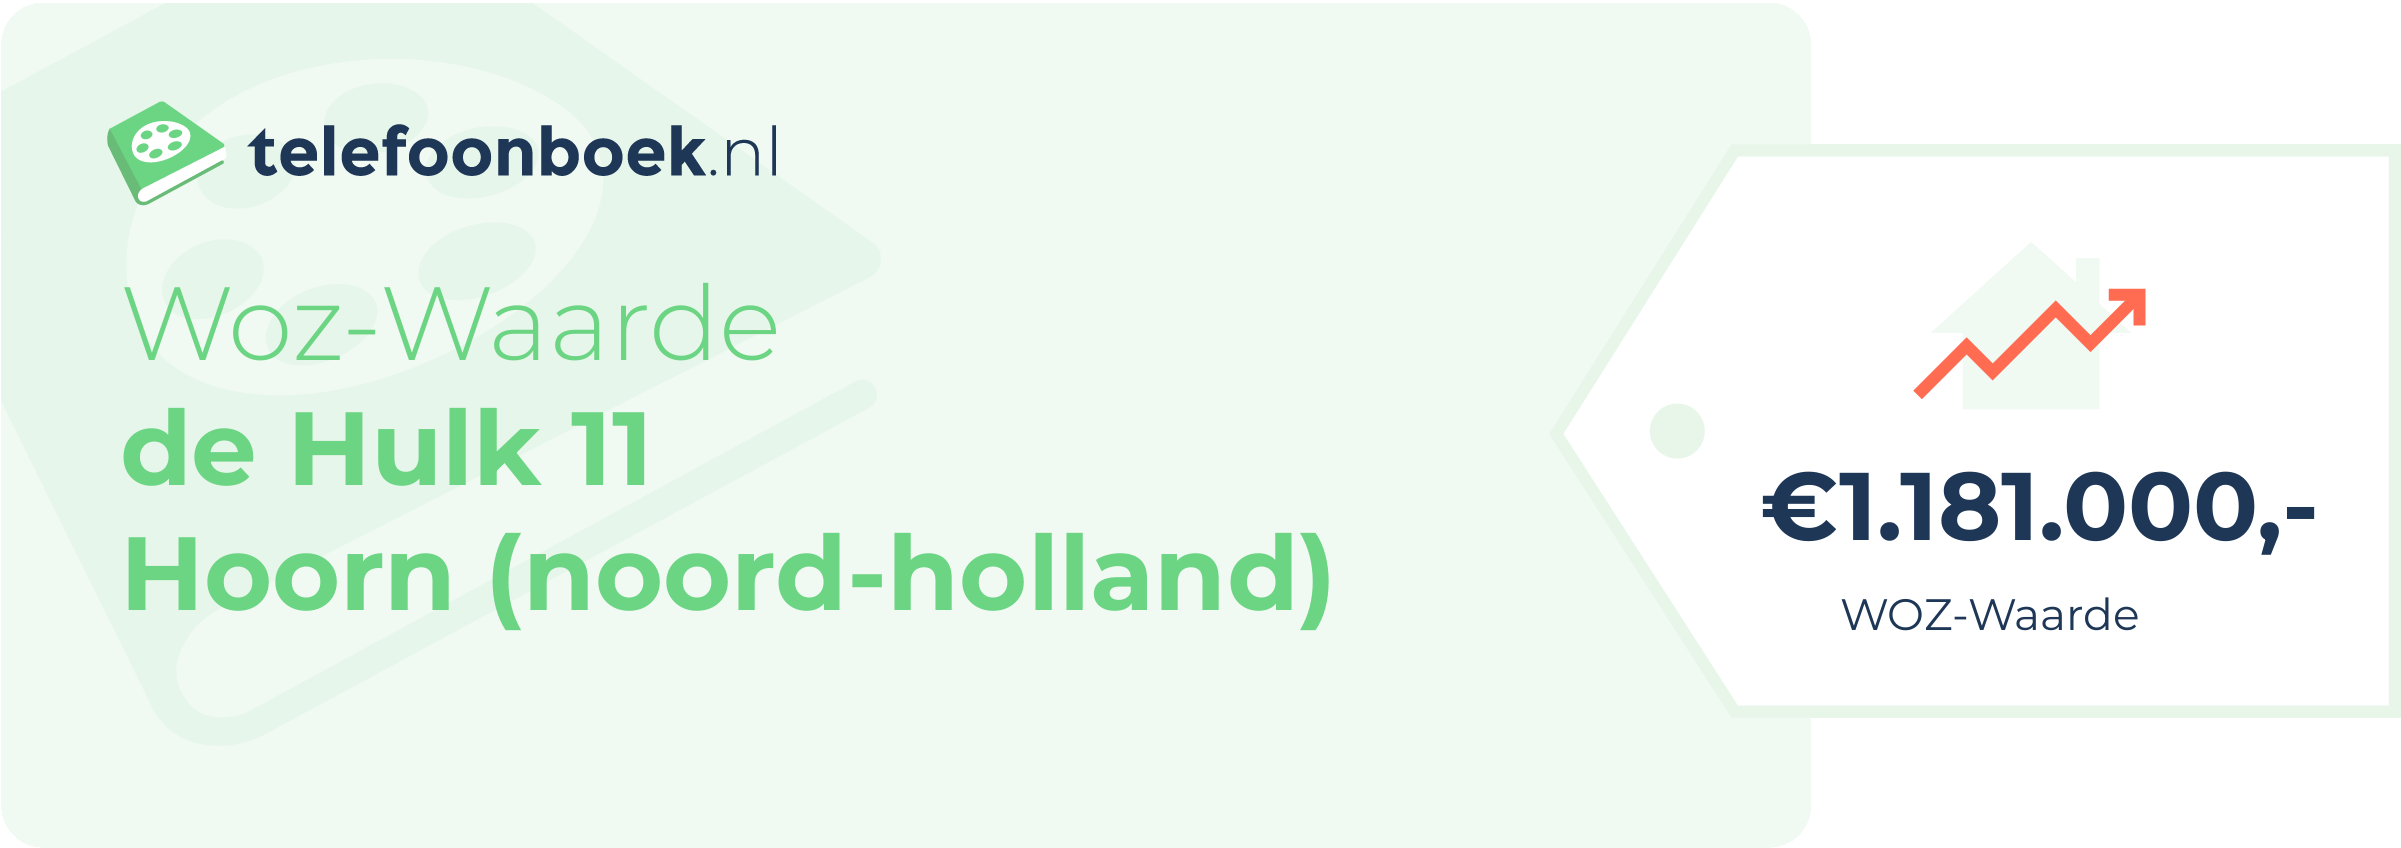 WOZ-waarde De Hulk 11 Hoorn (Noord-Holland)